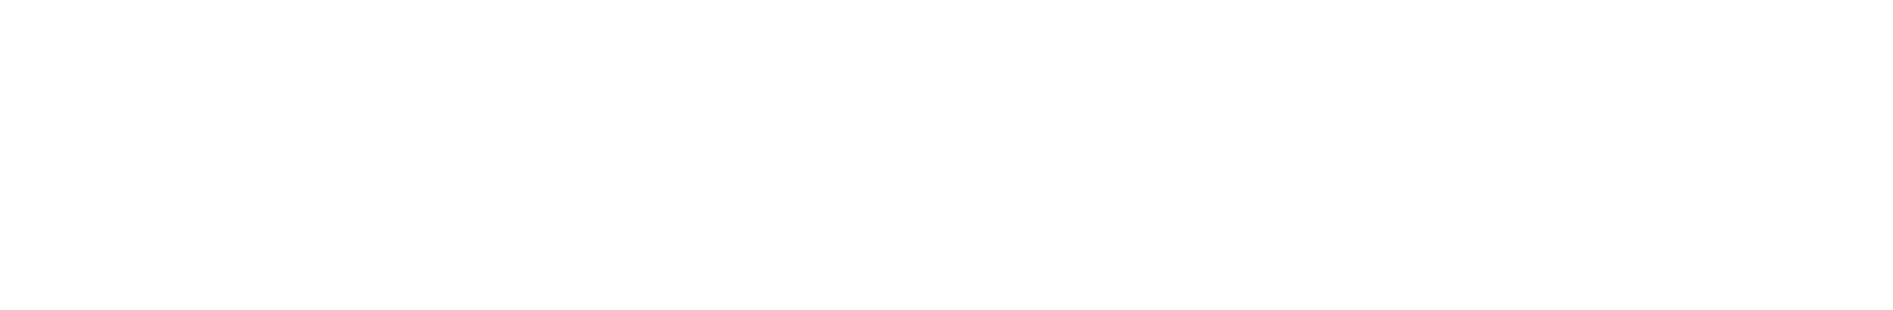 logo novartis white